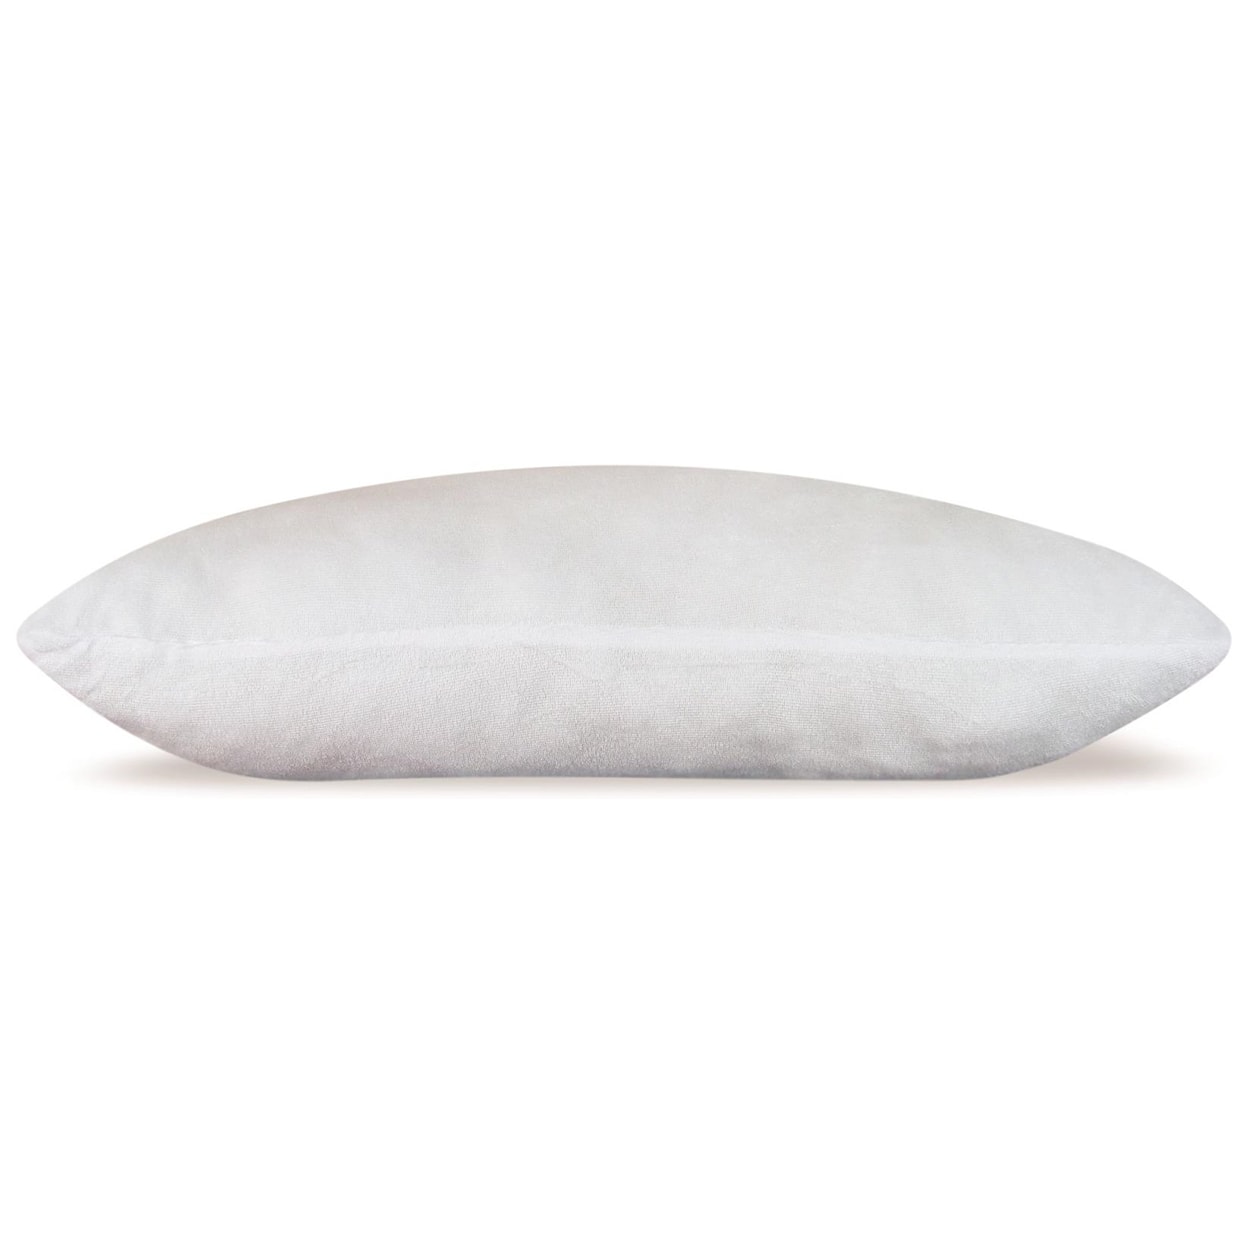 UV3 Masterguard Sleep Rite Standard Pillow